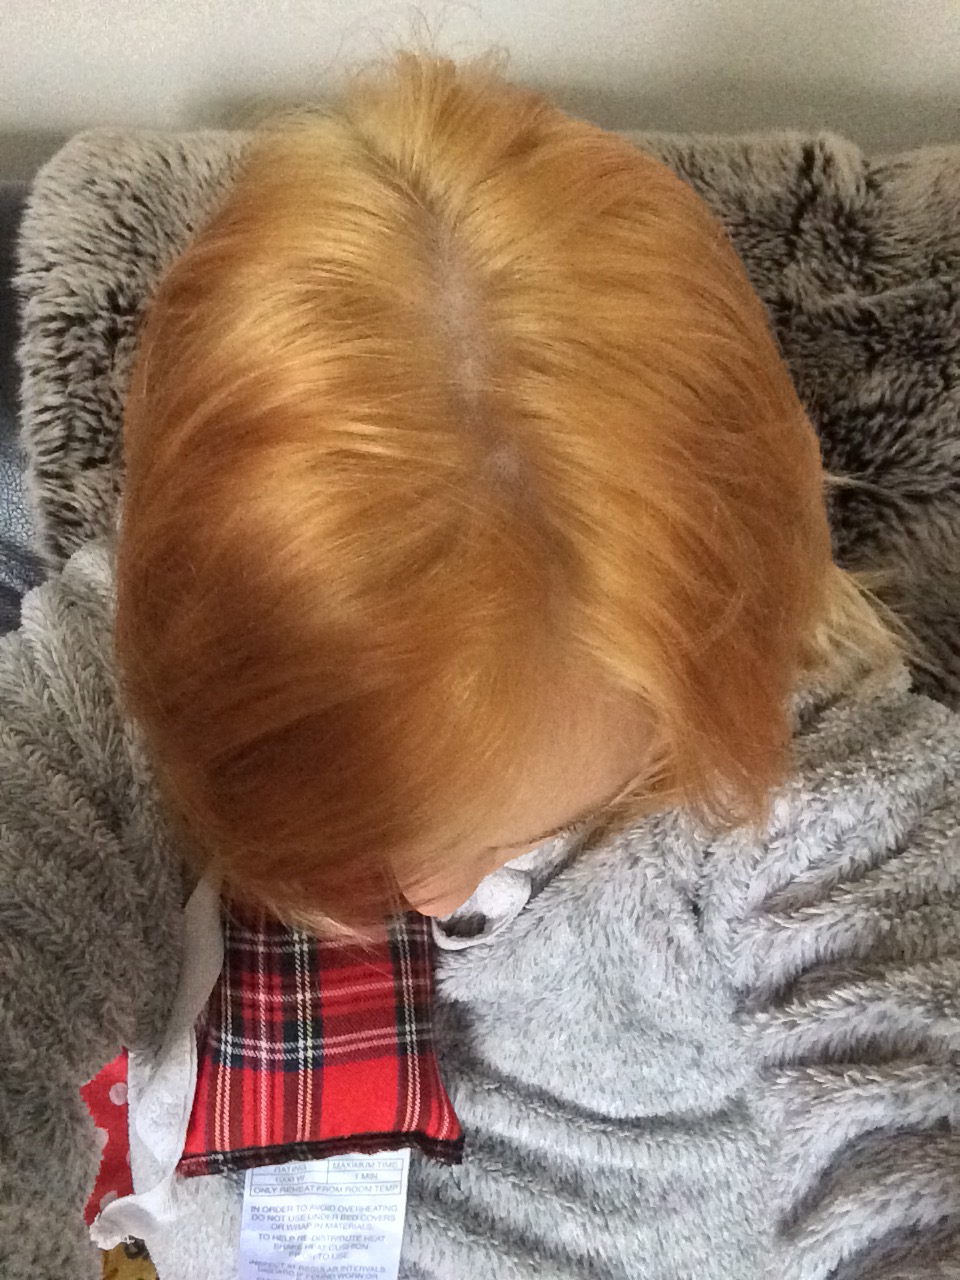 Ginger brassy hair after bleaching